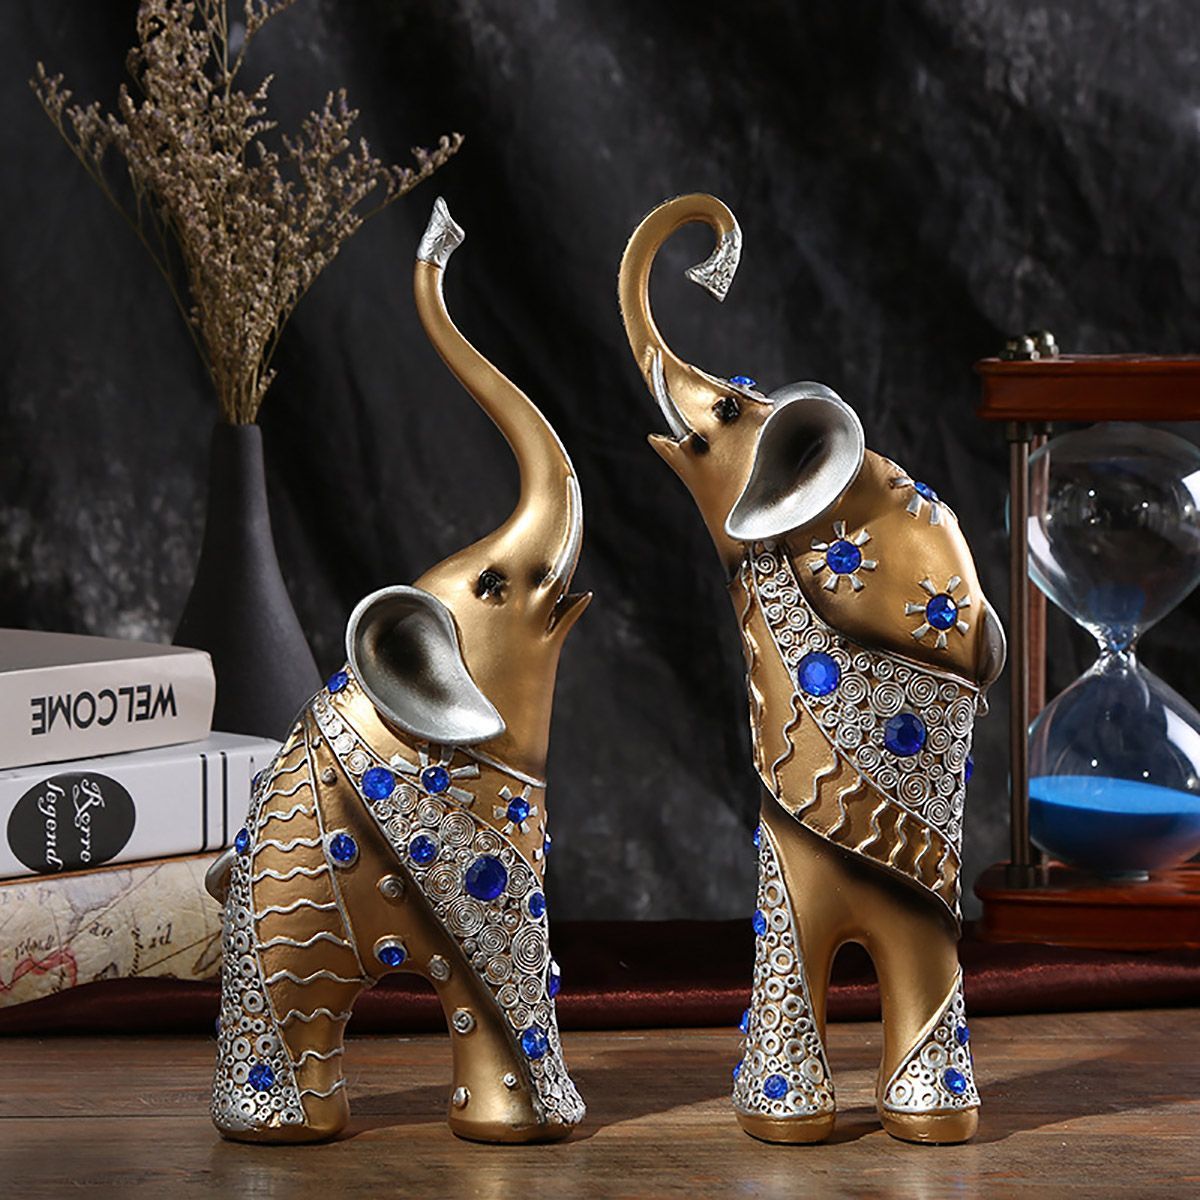 Elephant-Statue-Mother-Son-Art-Resin-Craft-Ornament-Home-Desktop-Table-Decorations-1624728